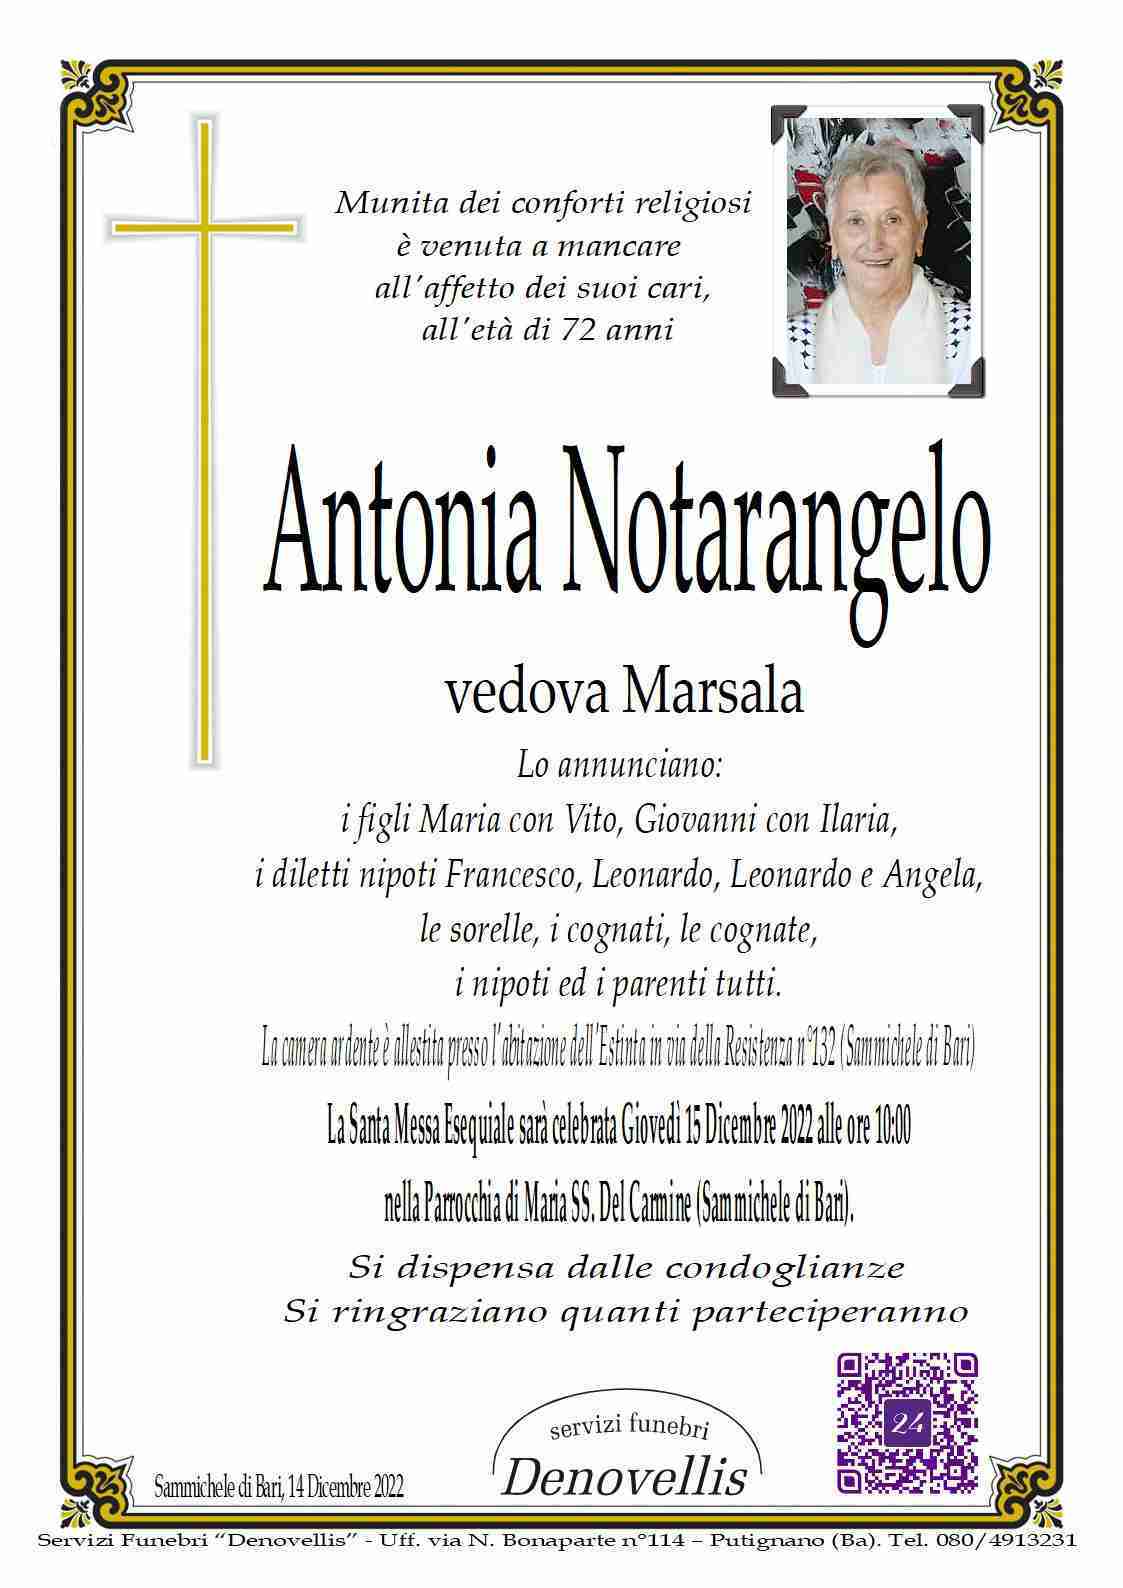 Antonia Notarangelo